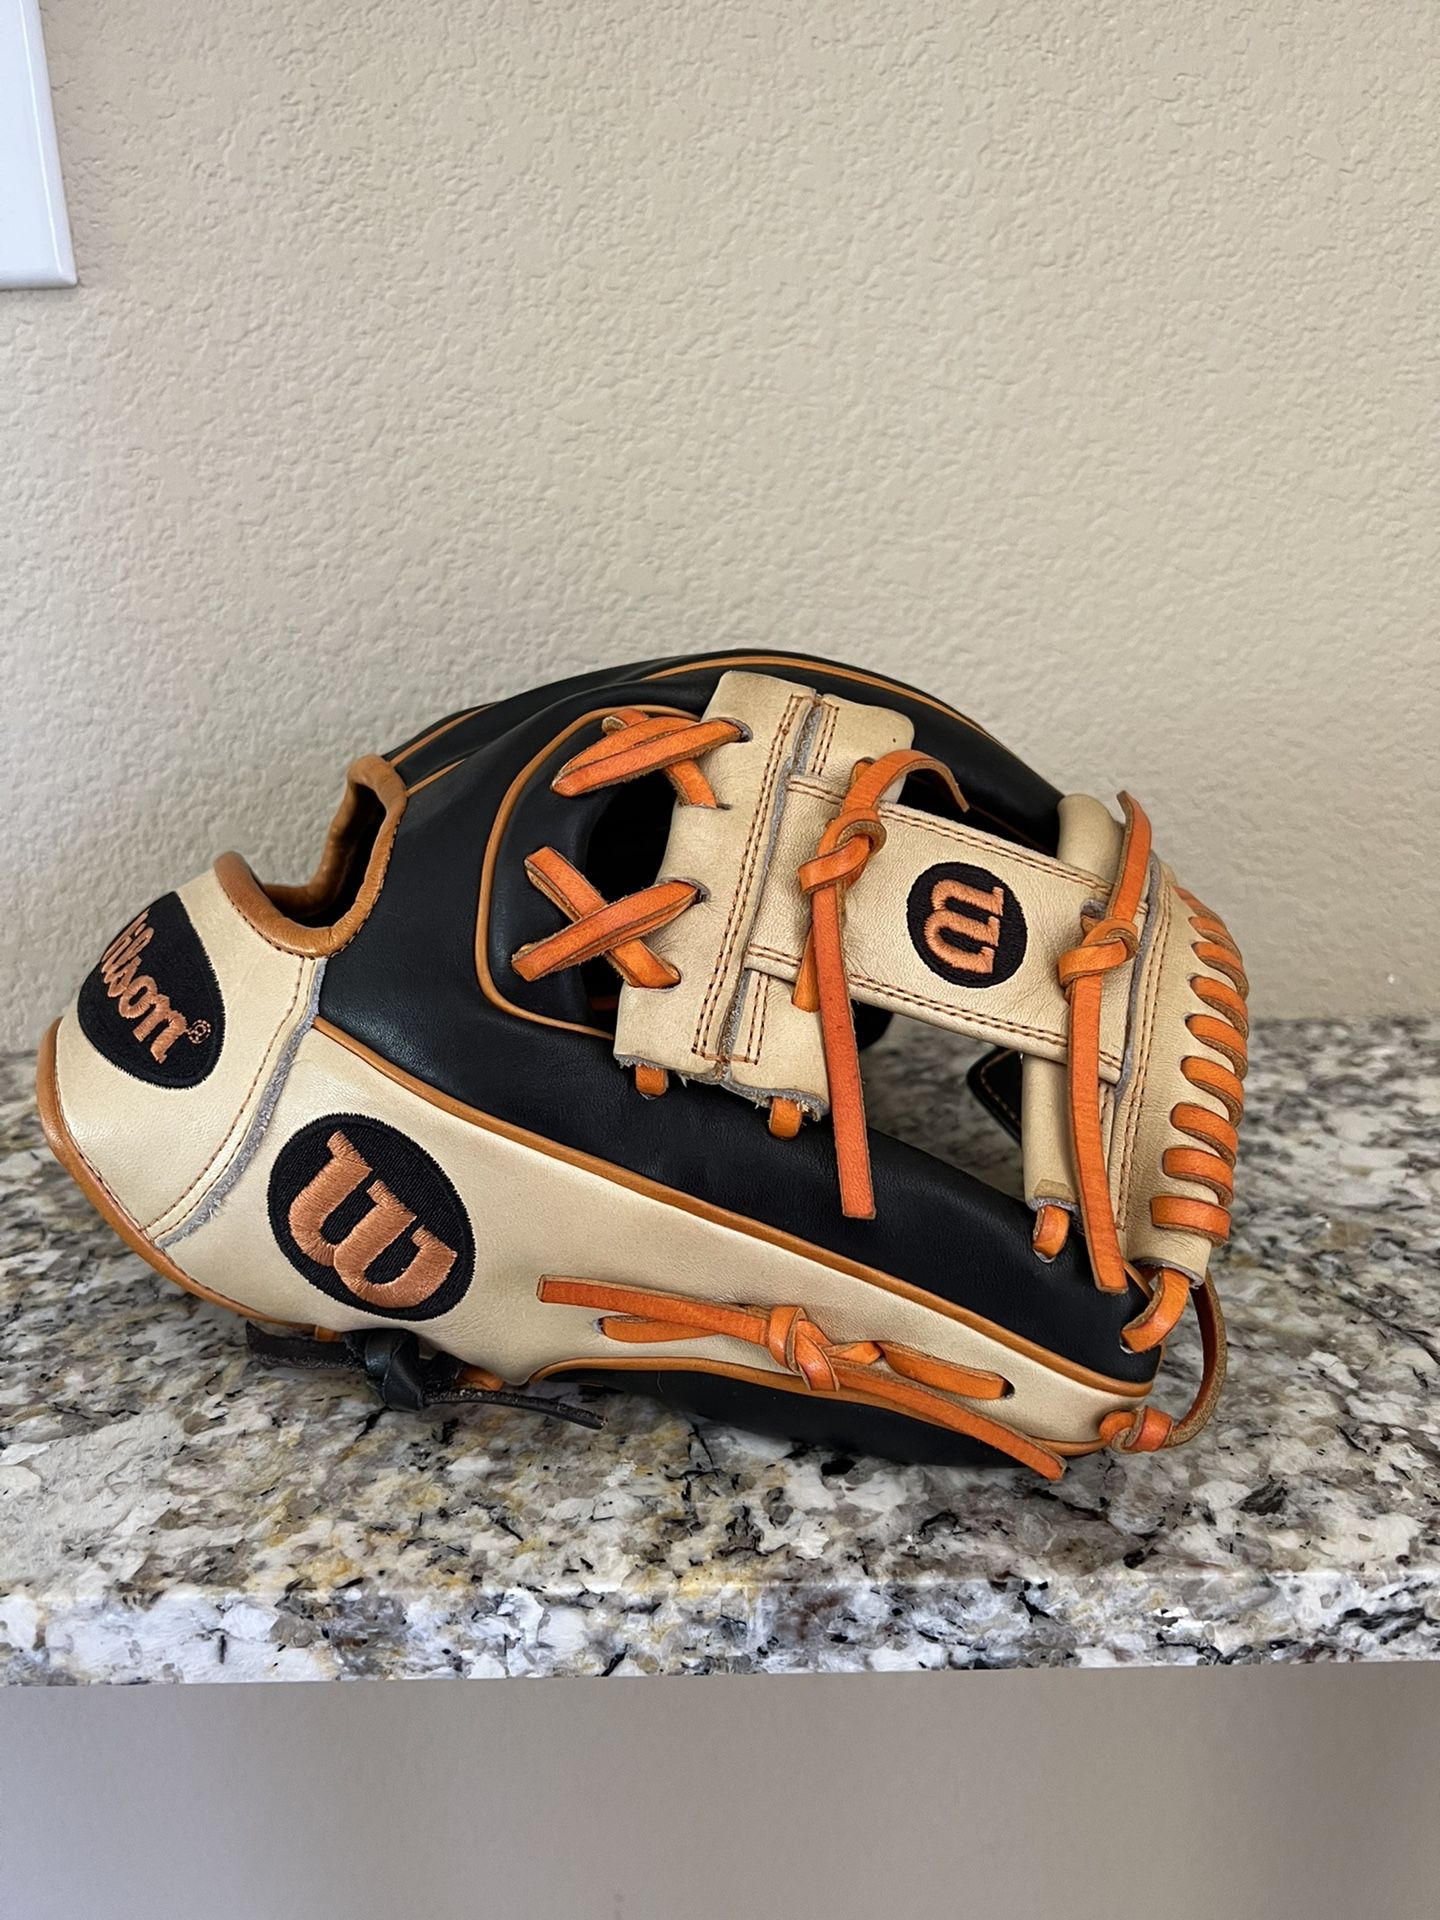 Wilson A2000 Baseball Glove (Altuve)